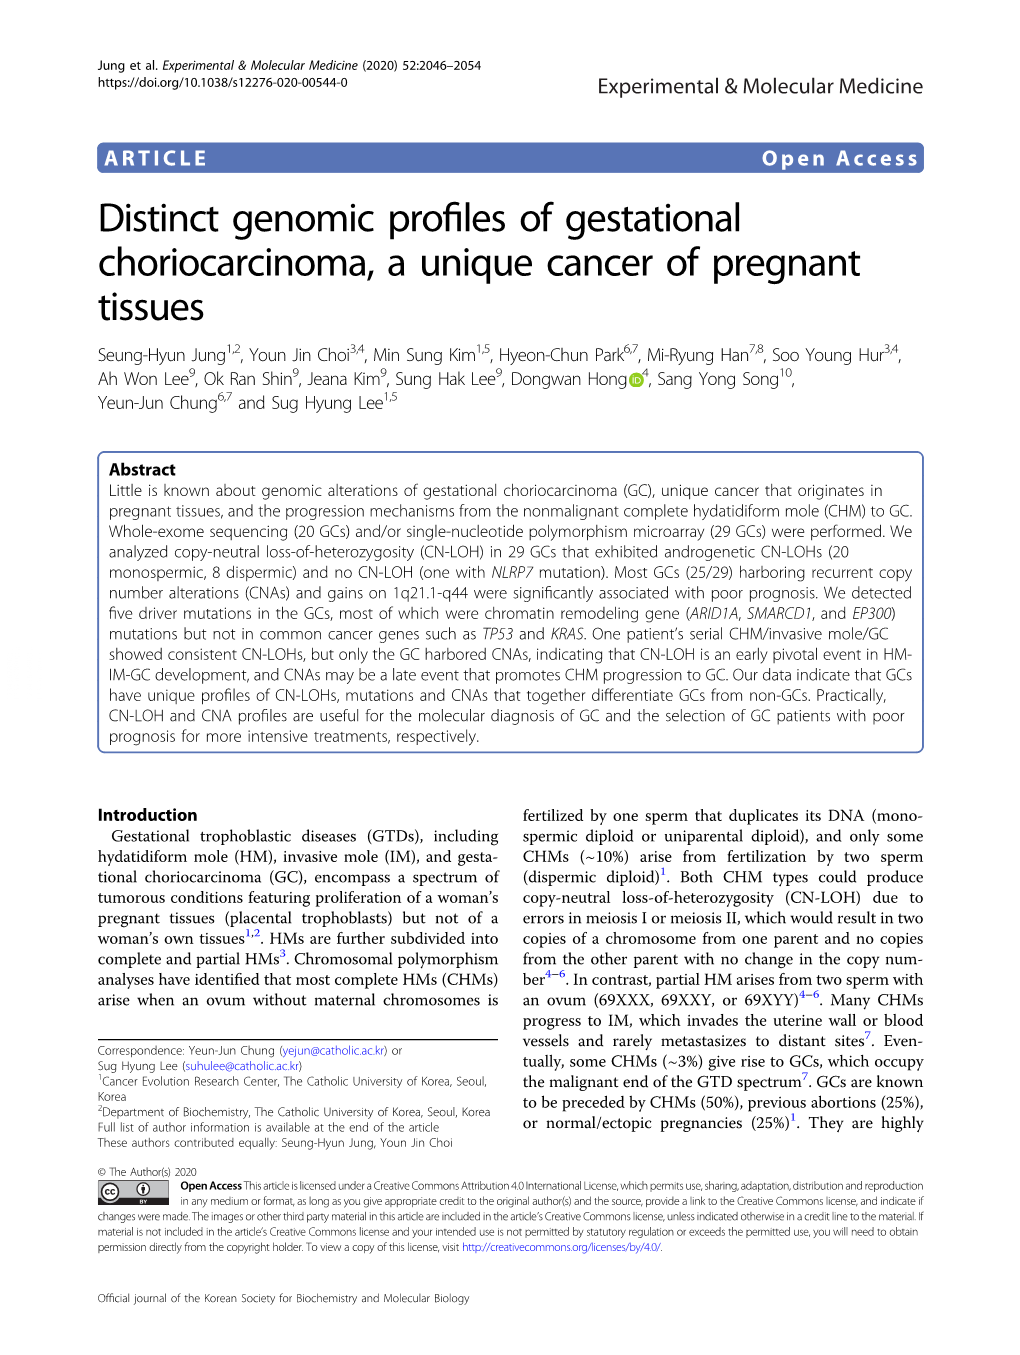 Distinct Genomic Profiles of Gestational Choriocarcinoma, a Unique Cancer